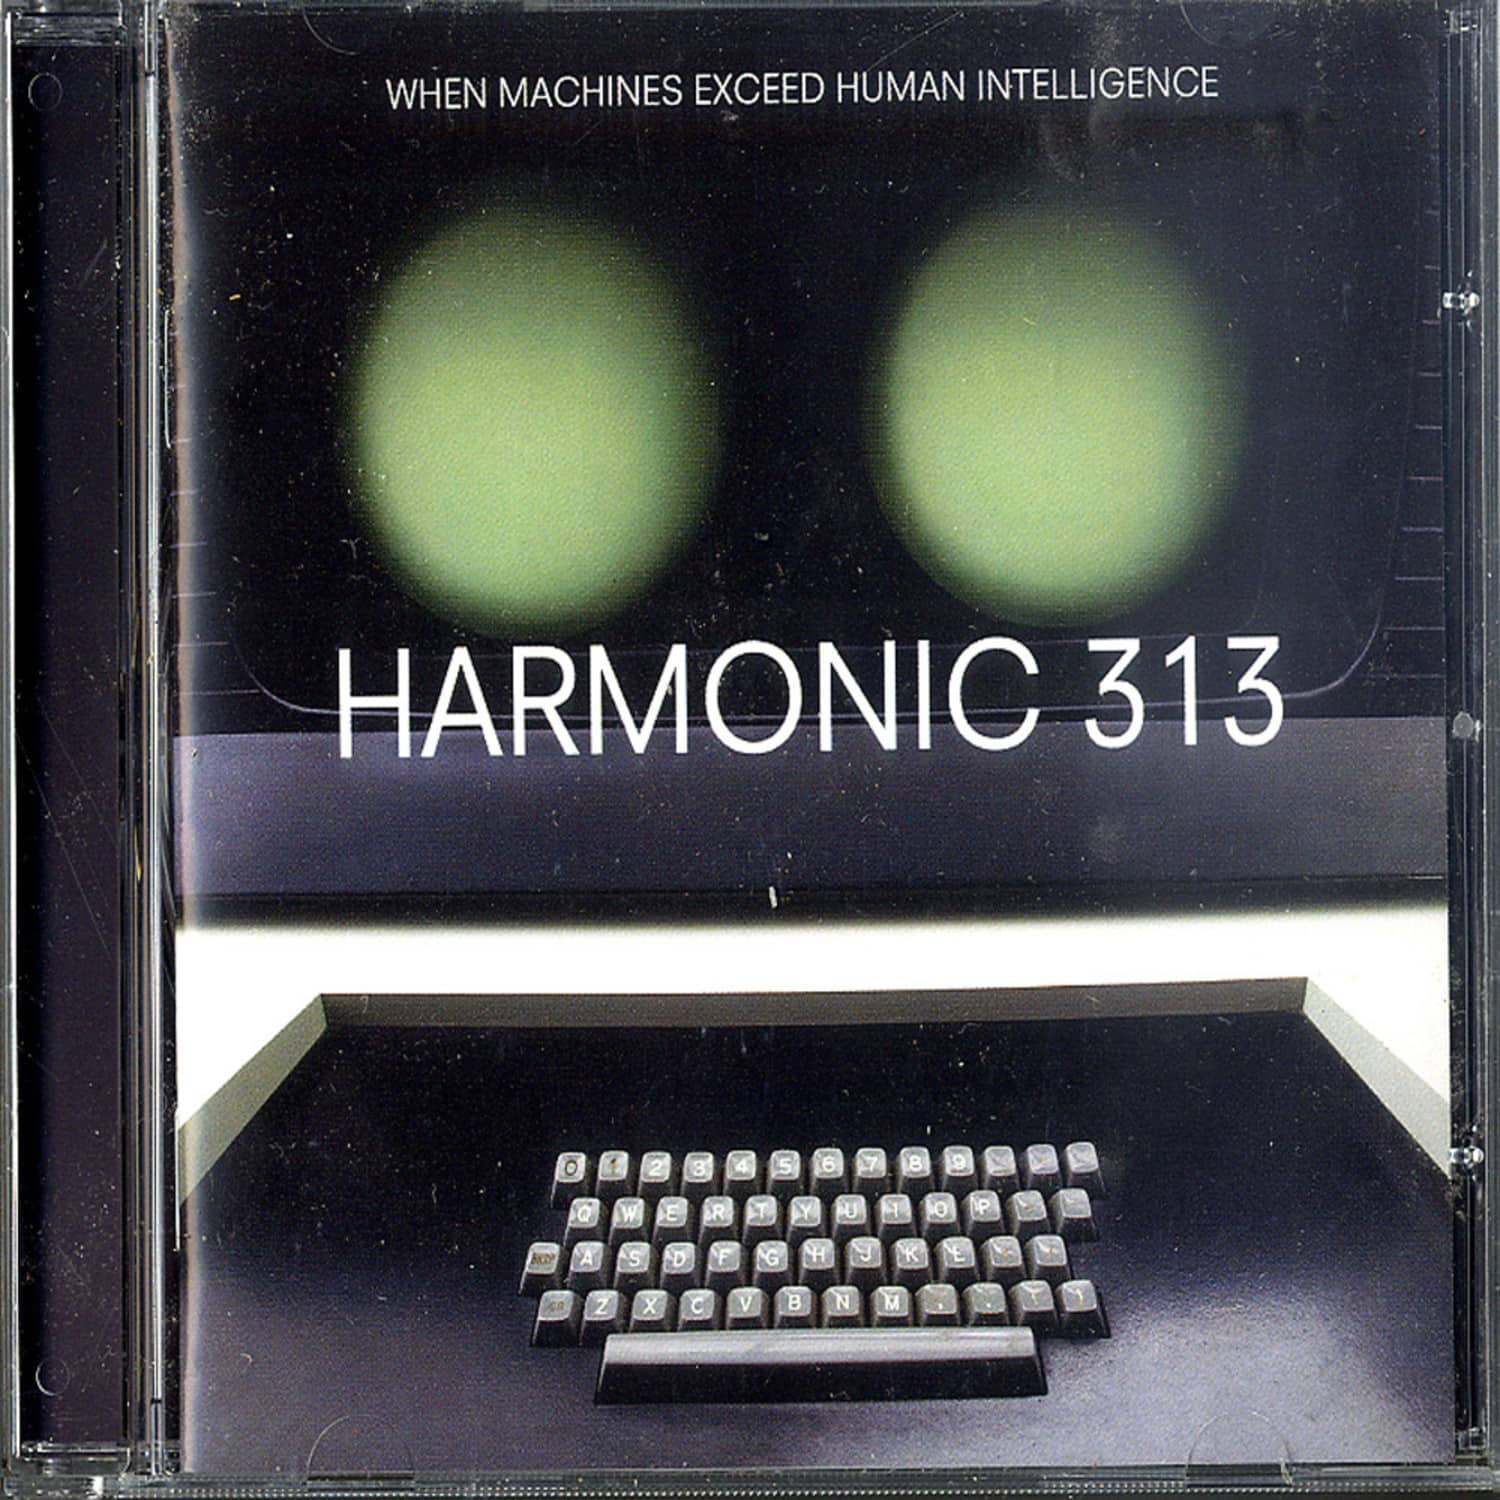 Harmonic 313 - WHEN MACHINES EXCEED HUMAN INTELLIGENCE 